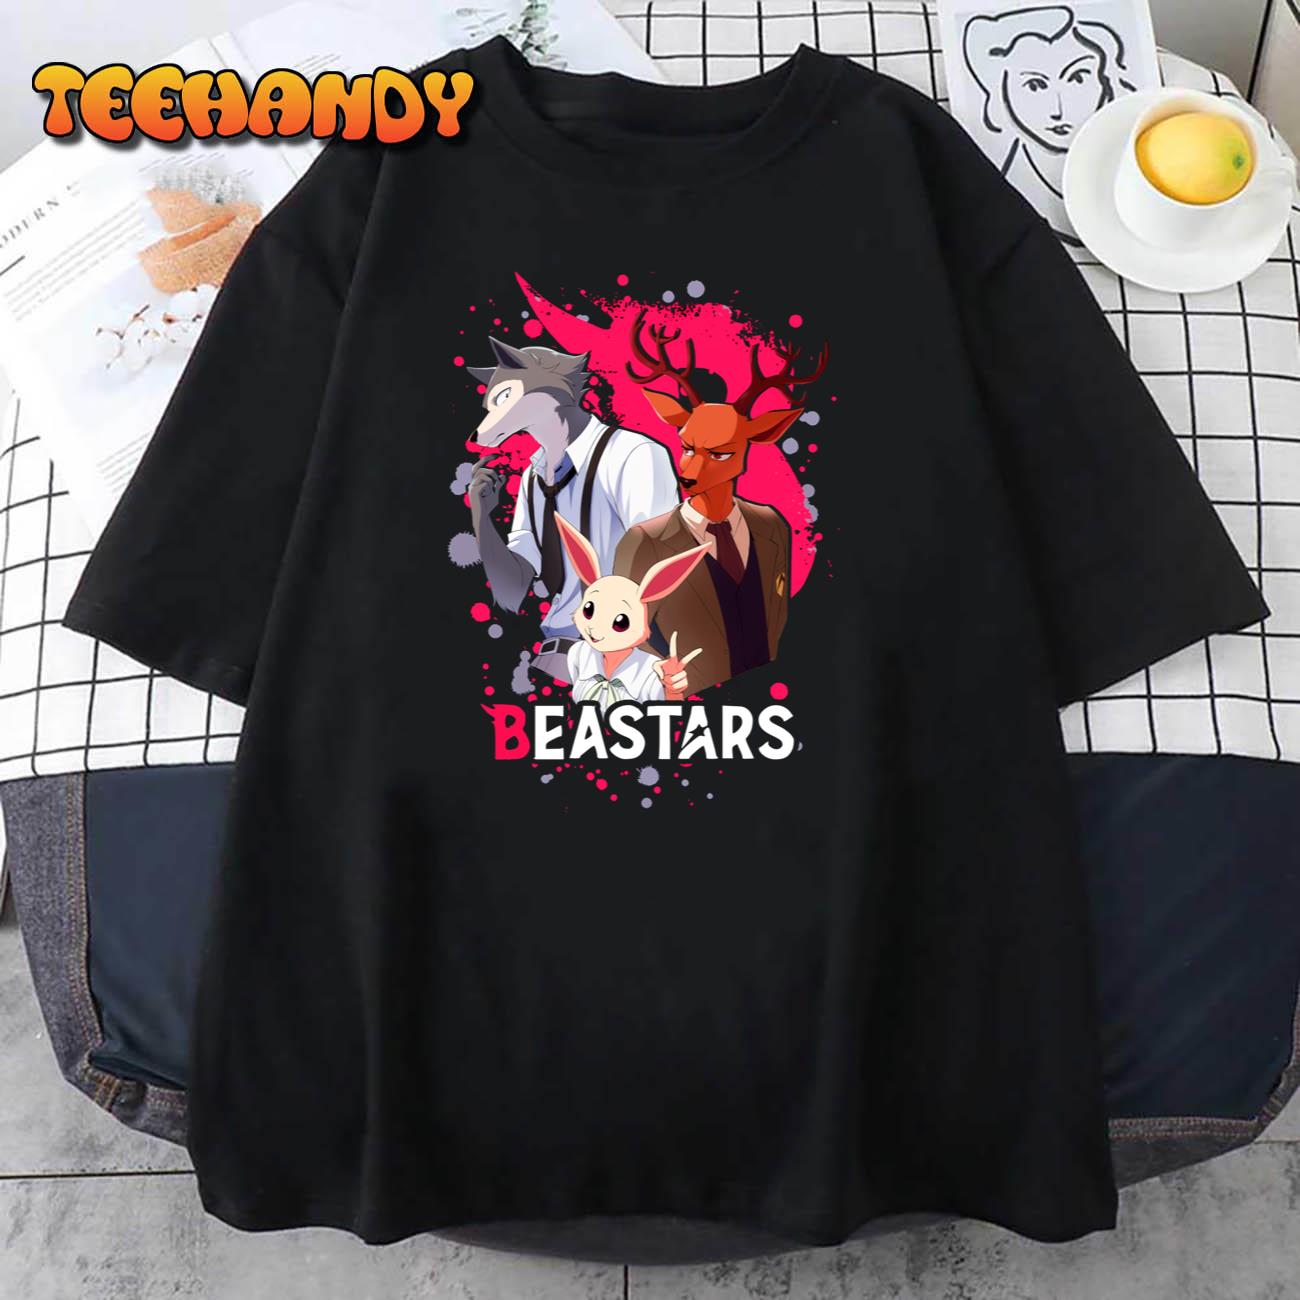 Beastars Anime Unisex T-Shirt